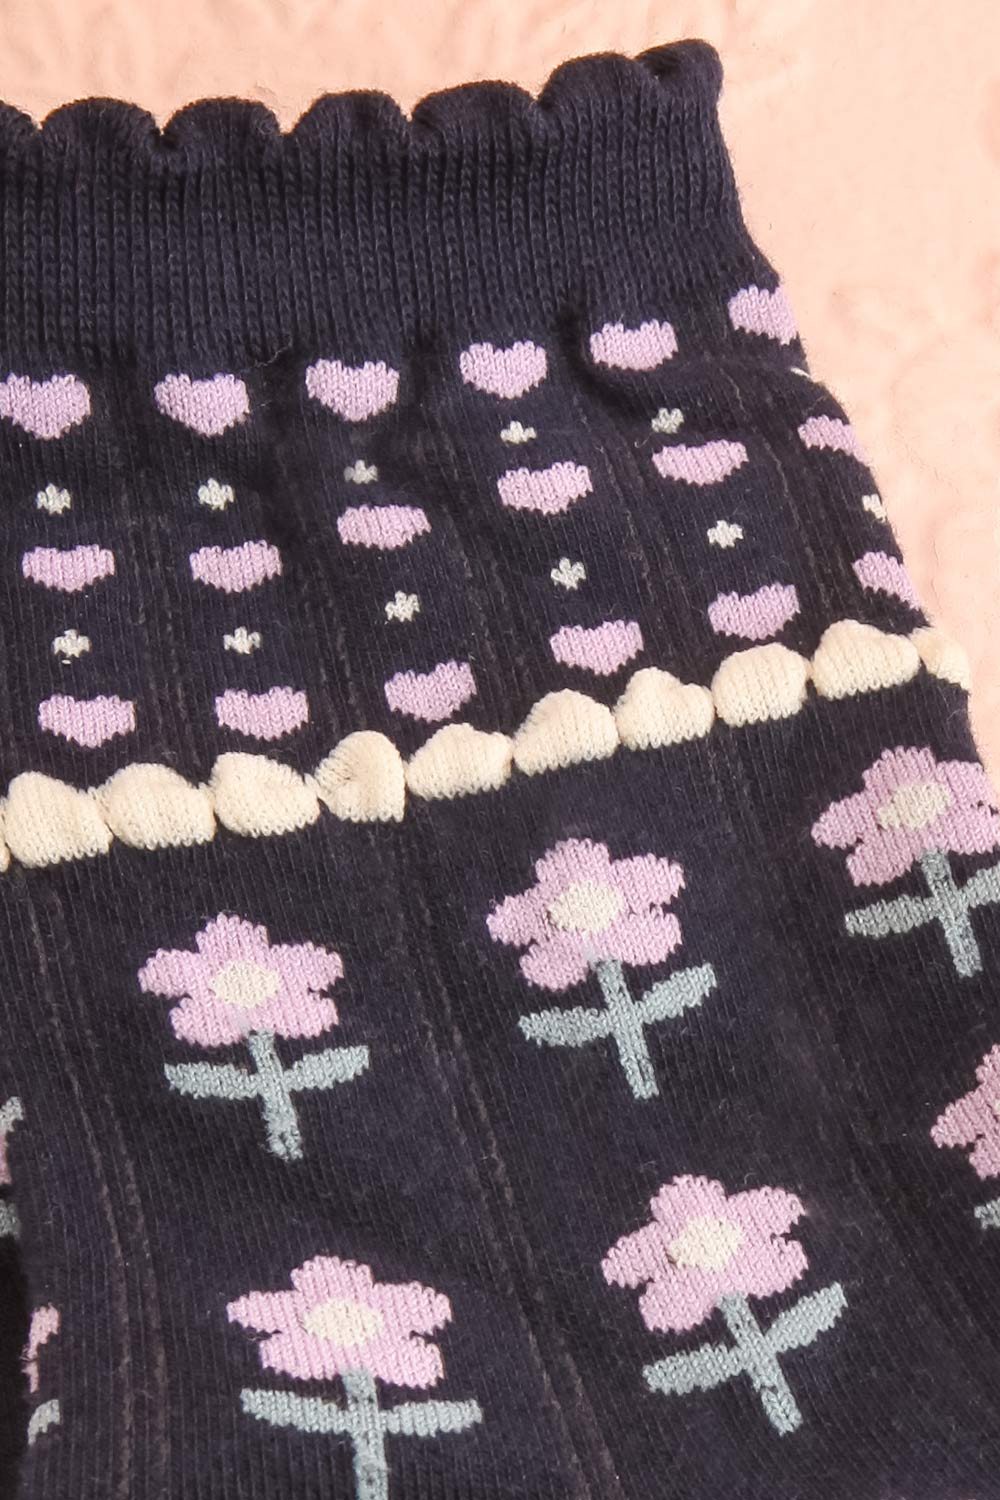 Torri Black Floral Crew Socks | Boutique 1861 close-up